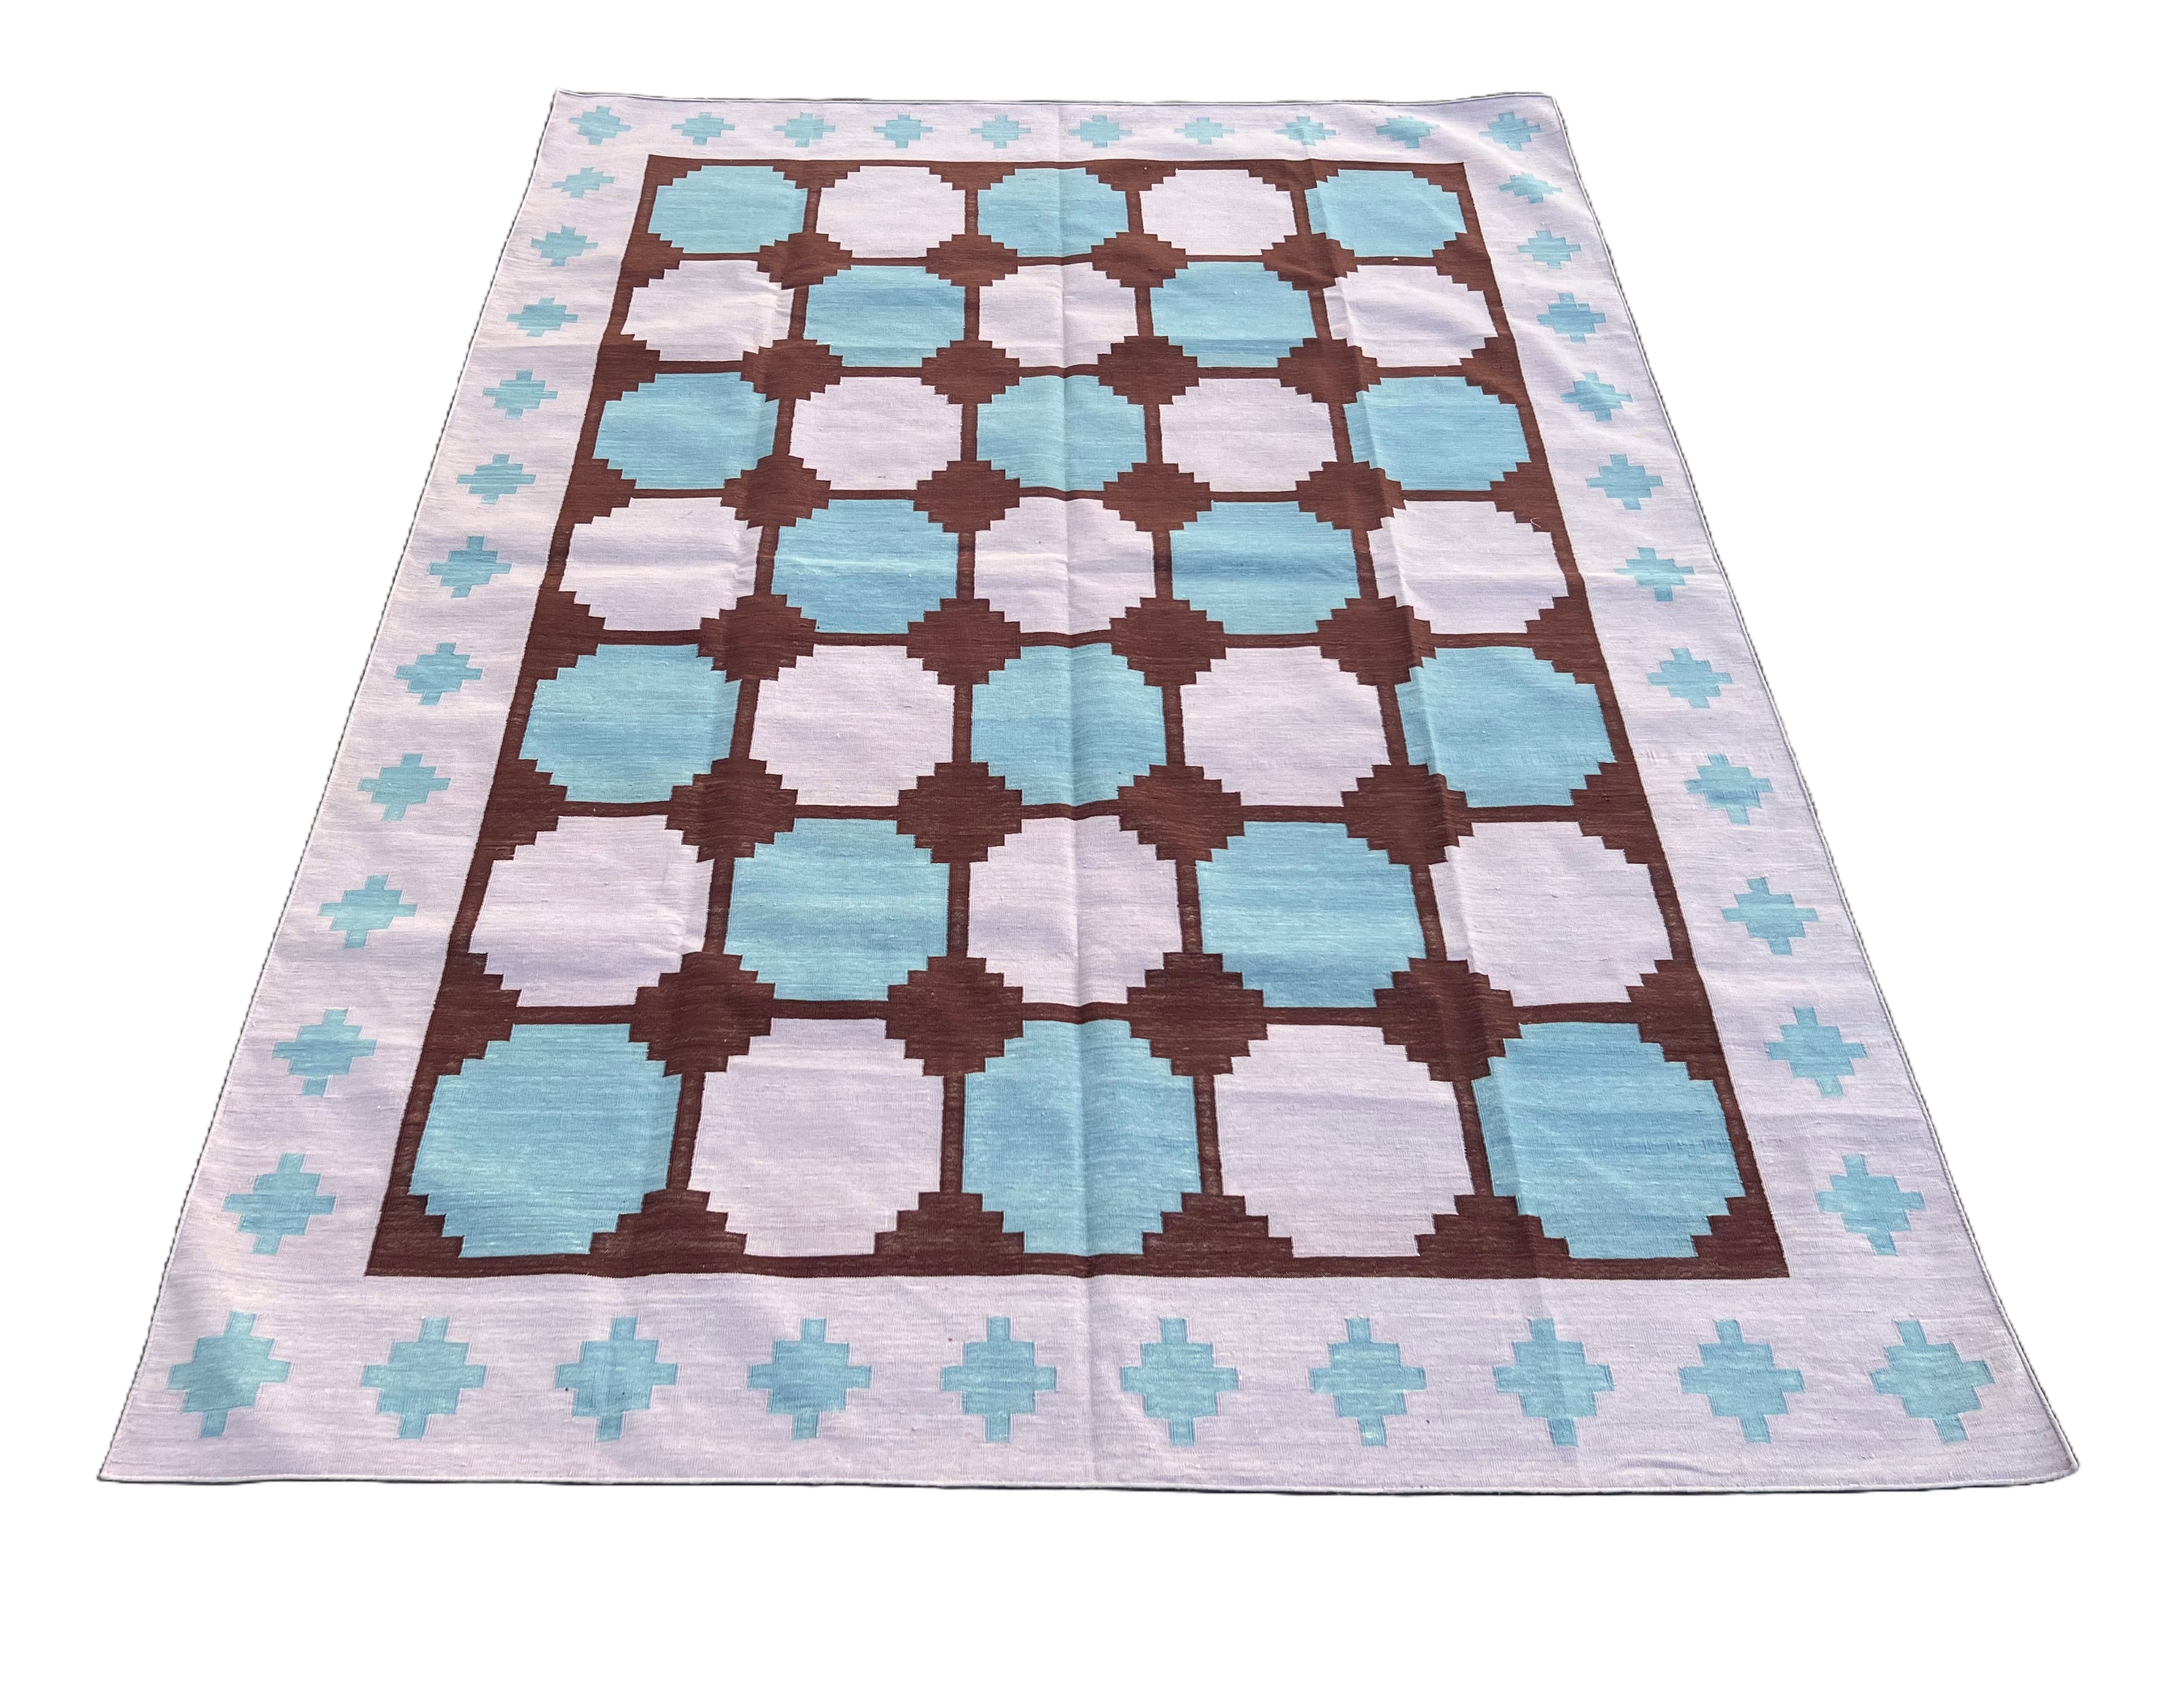 Modern Handmade Cotton Lavender And Blue Geometric Tile Star Rug-6539